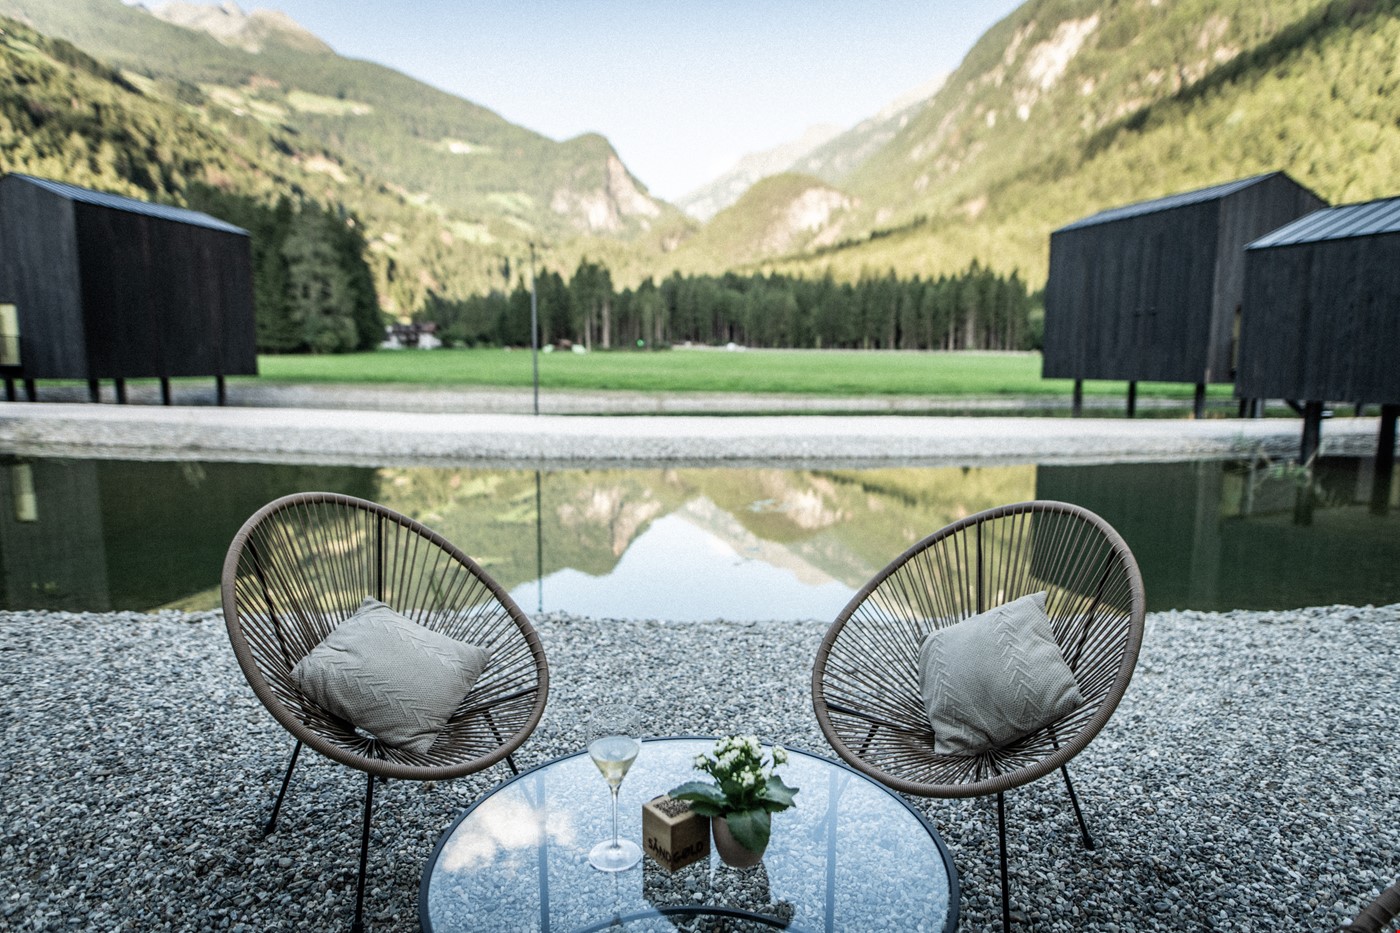 Hotel South Tyrol Italy nomad remote 5bf82a13-2cc8-49c9-9fa8-301145d210e6_greenhouseprosecco.jpg